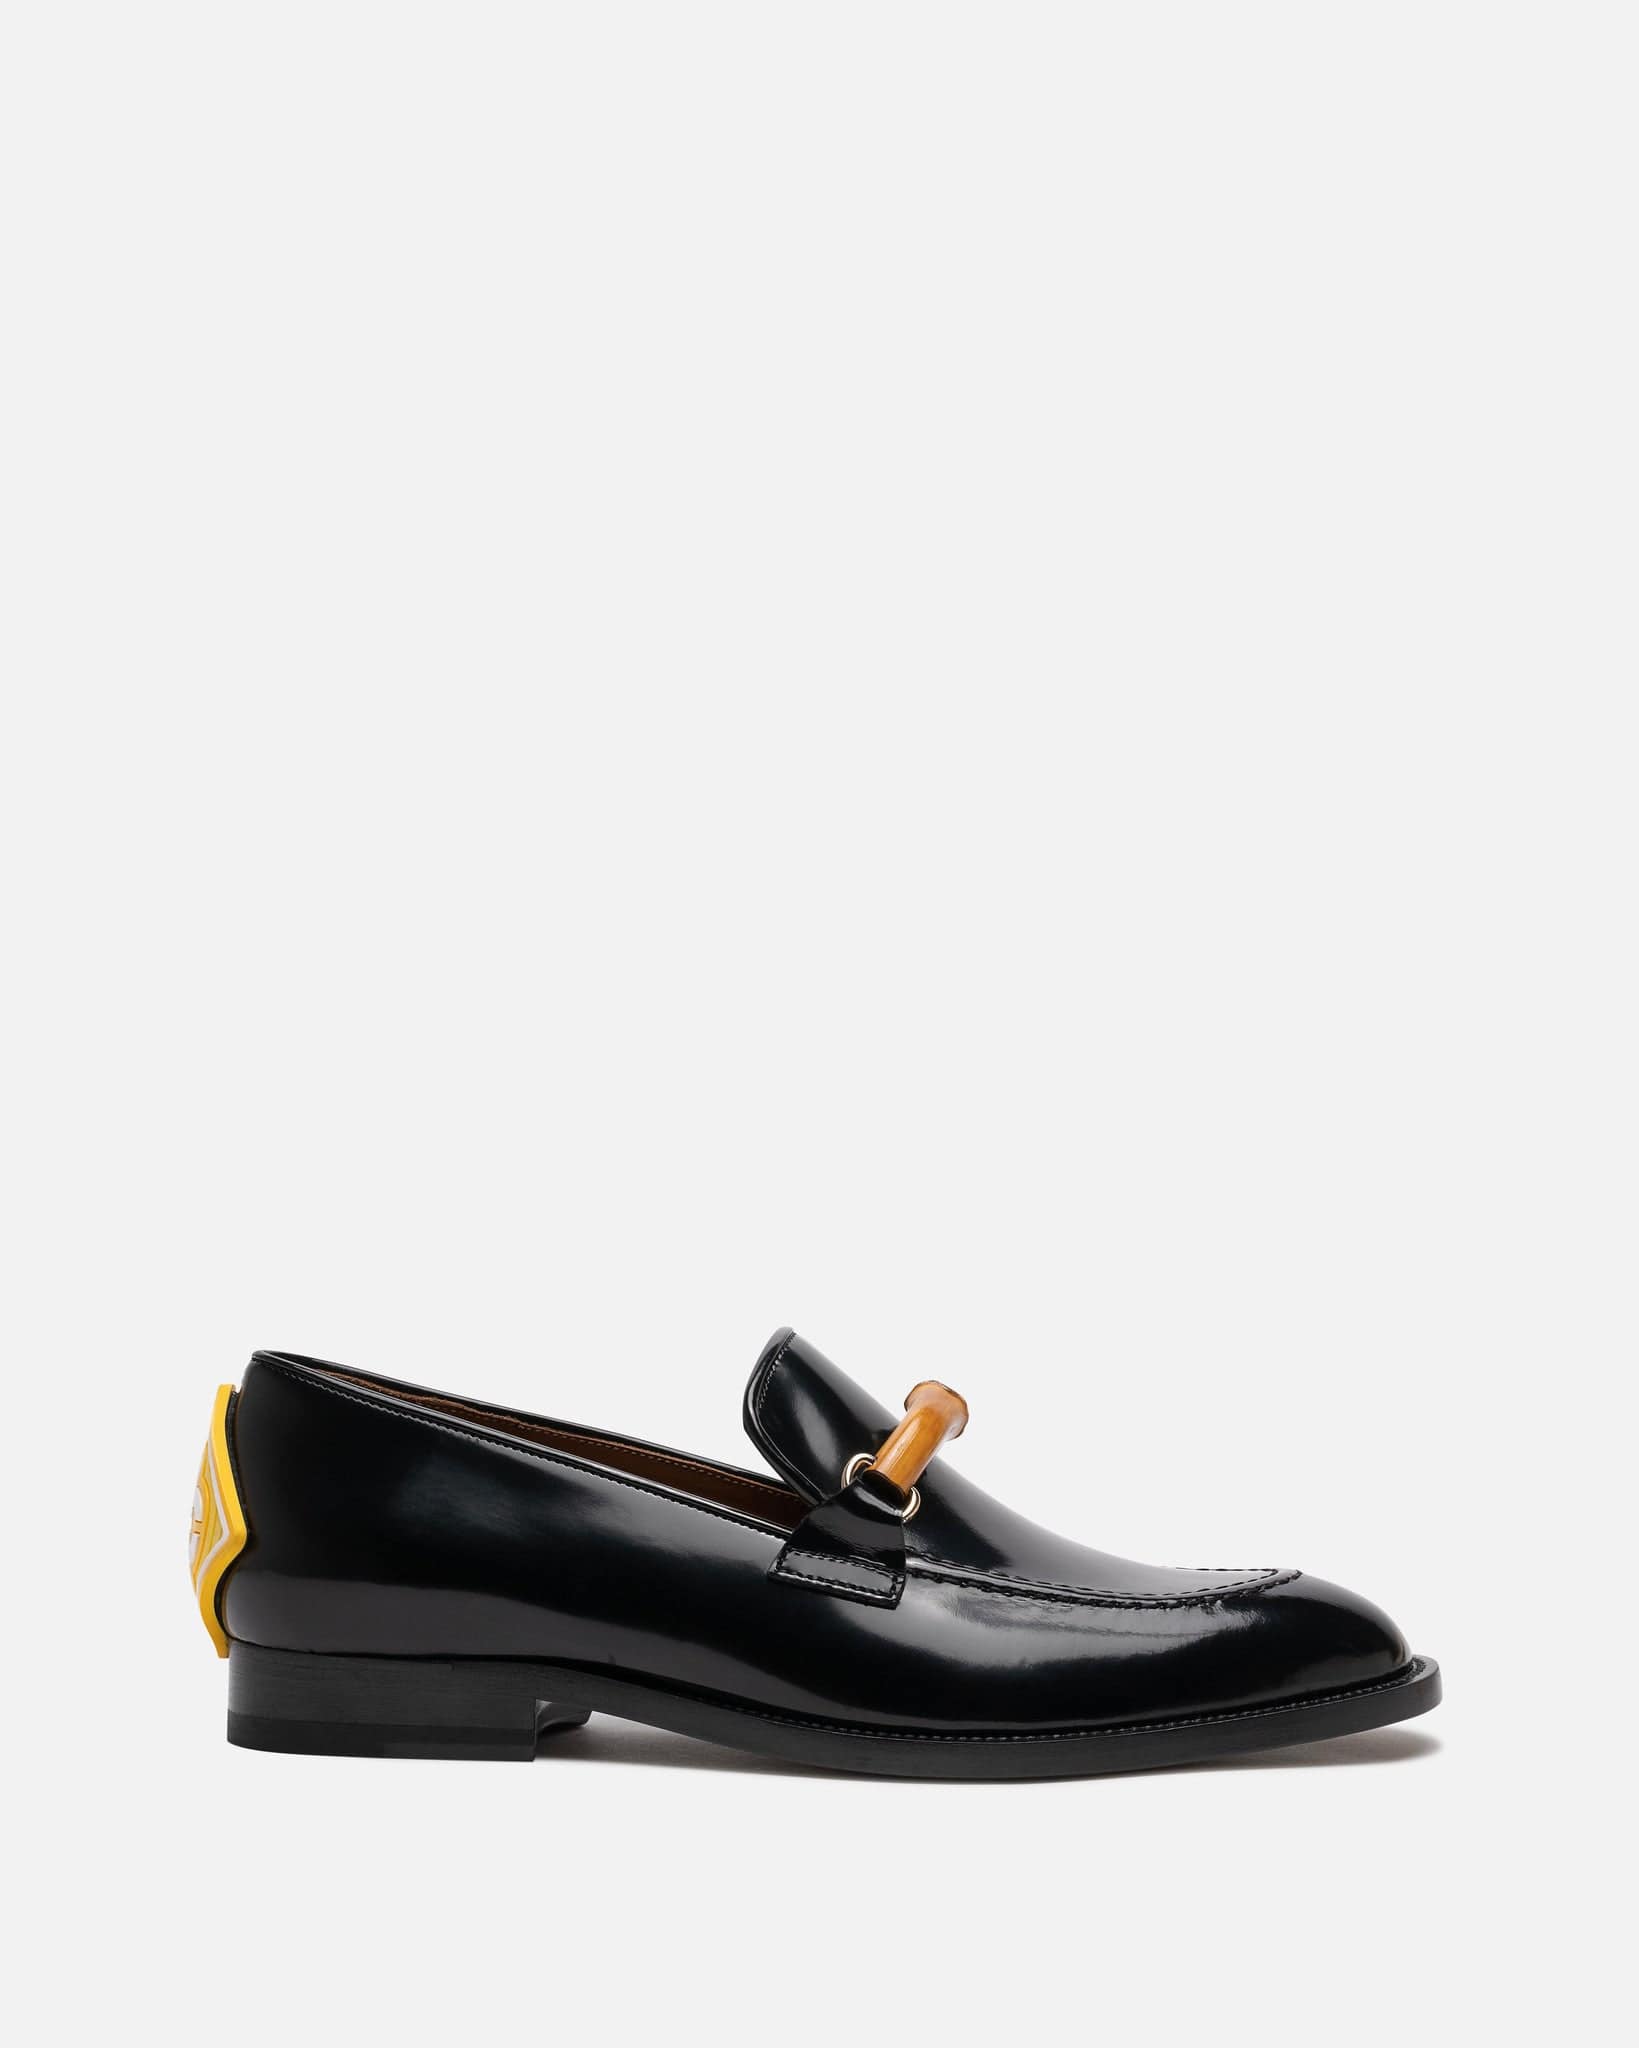 Casablanca Men's Shoes Block Color Loafer in Black/Yellow